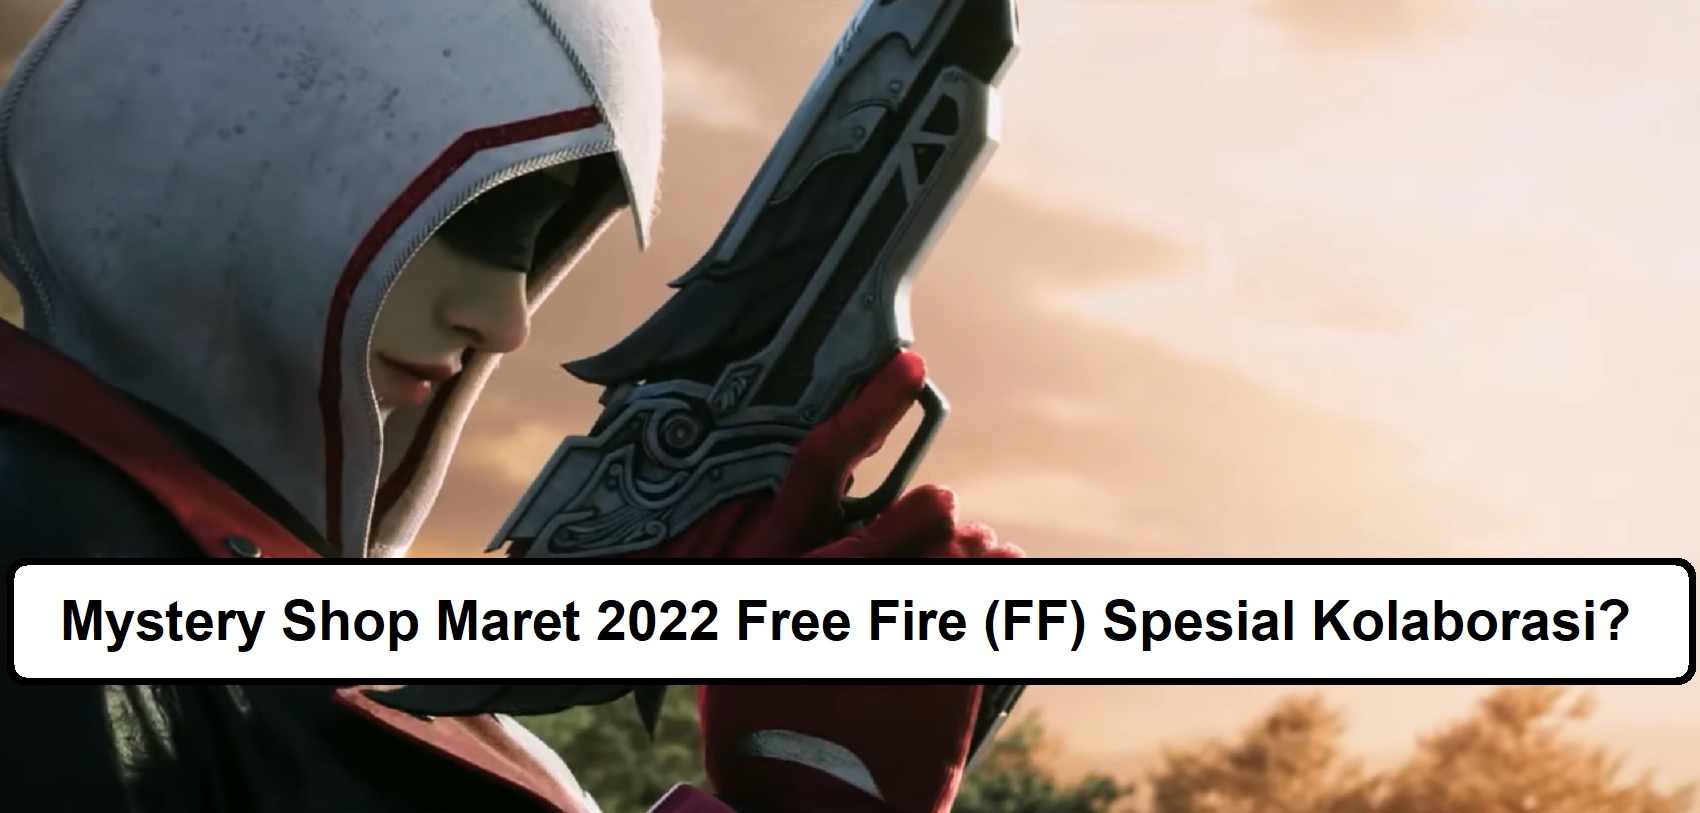 Mystery Shop Maret 2022 Free Fire (FF) Spesial Kolaborasi?